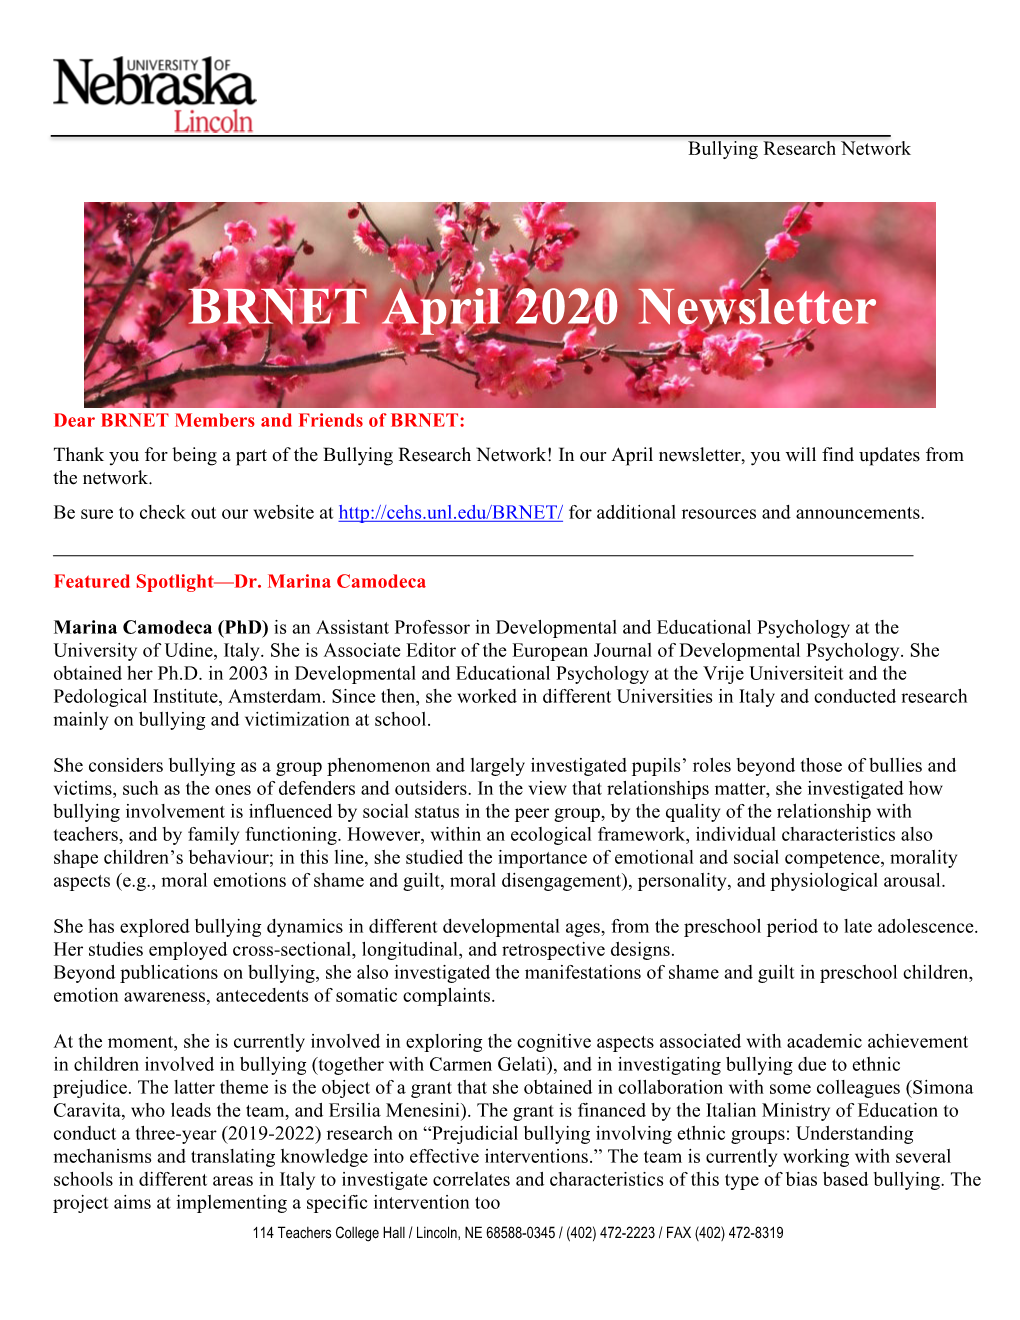 BRNET April 2020 Newsletter